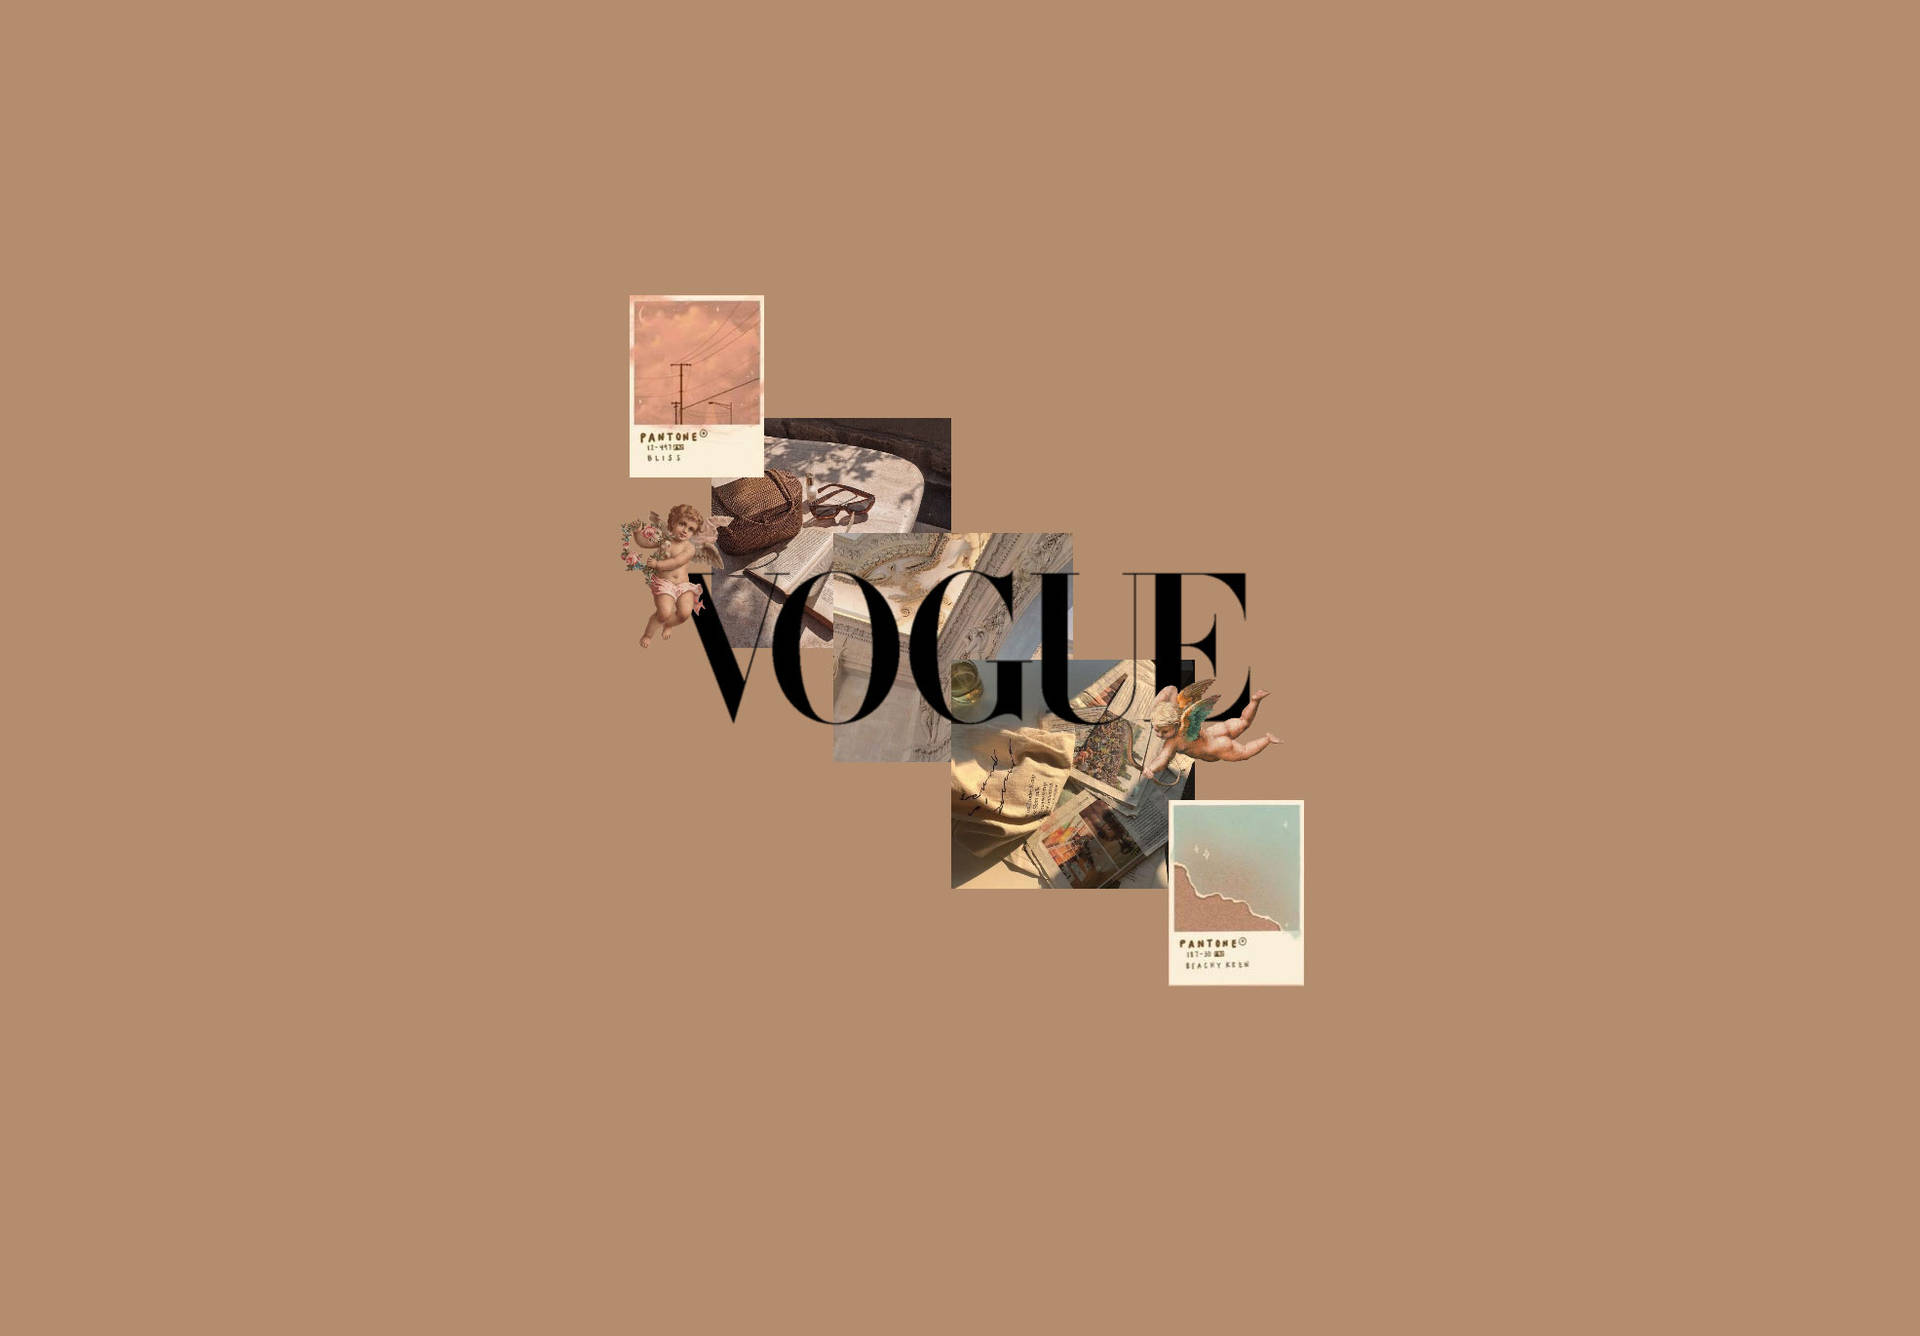 Vogue Magazine On Beige Brown Aesthetic